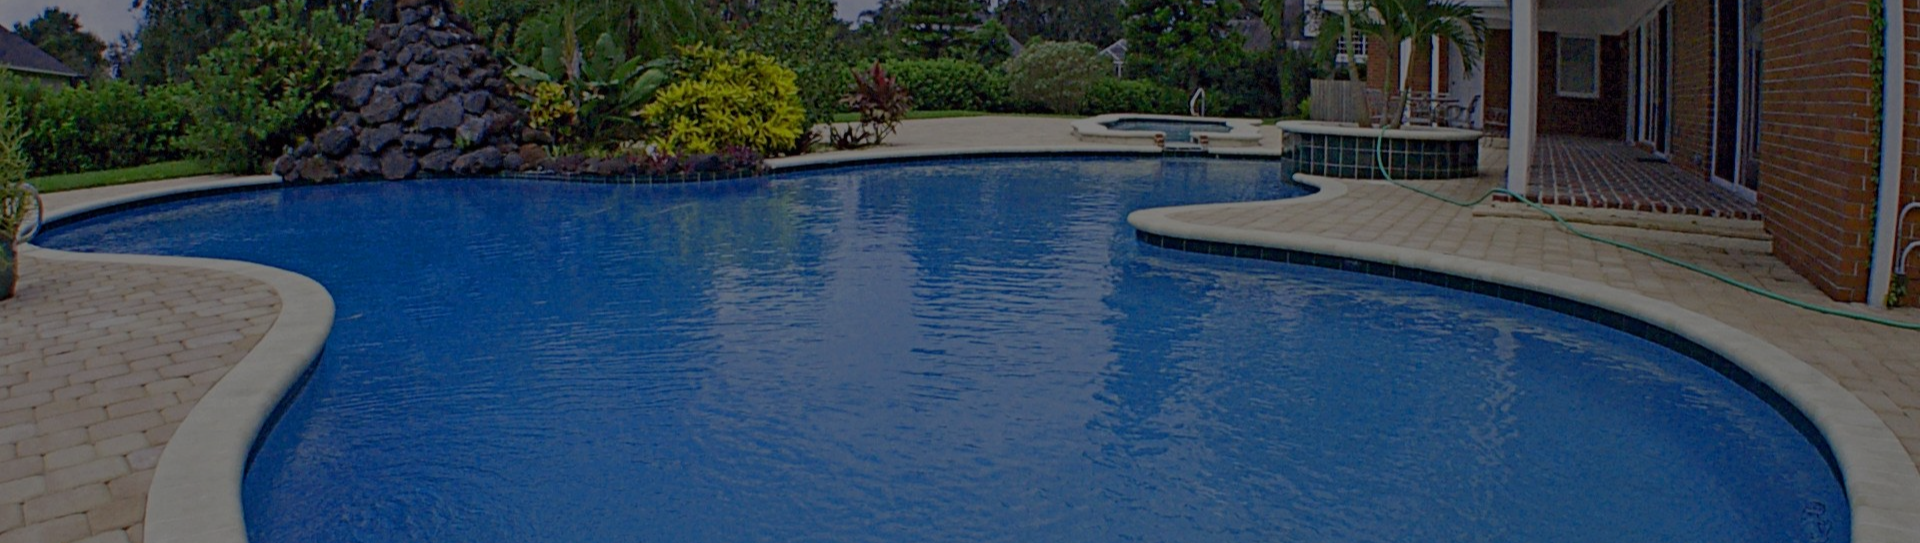 Swimming Pool Contractor Insurance - Contractors Insurance